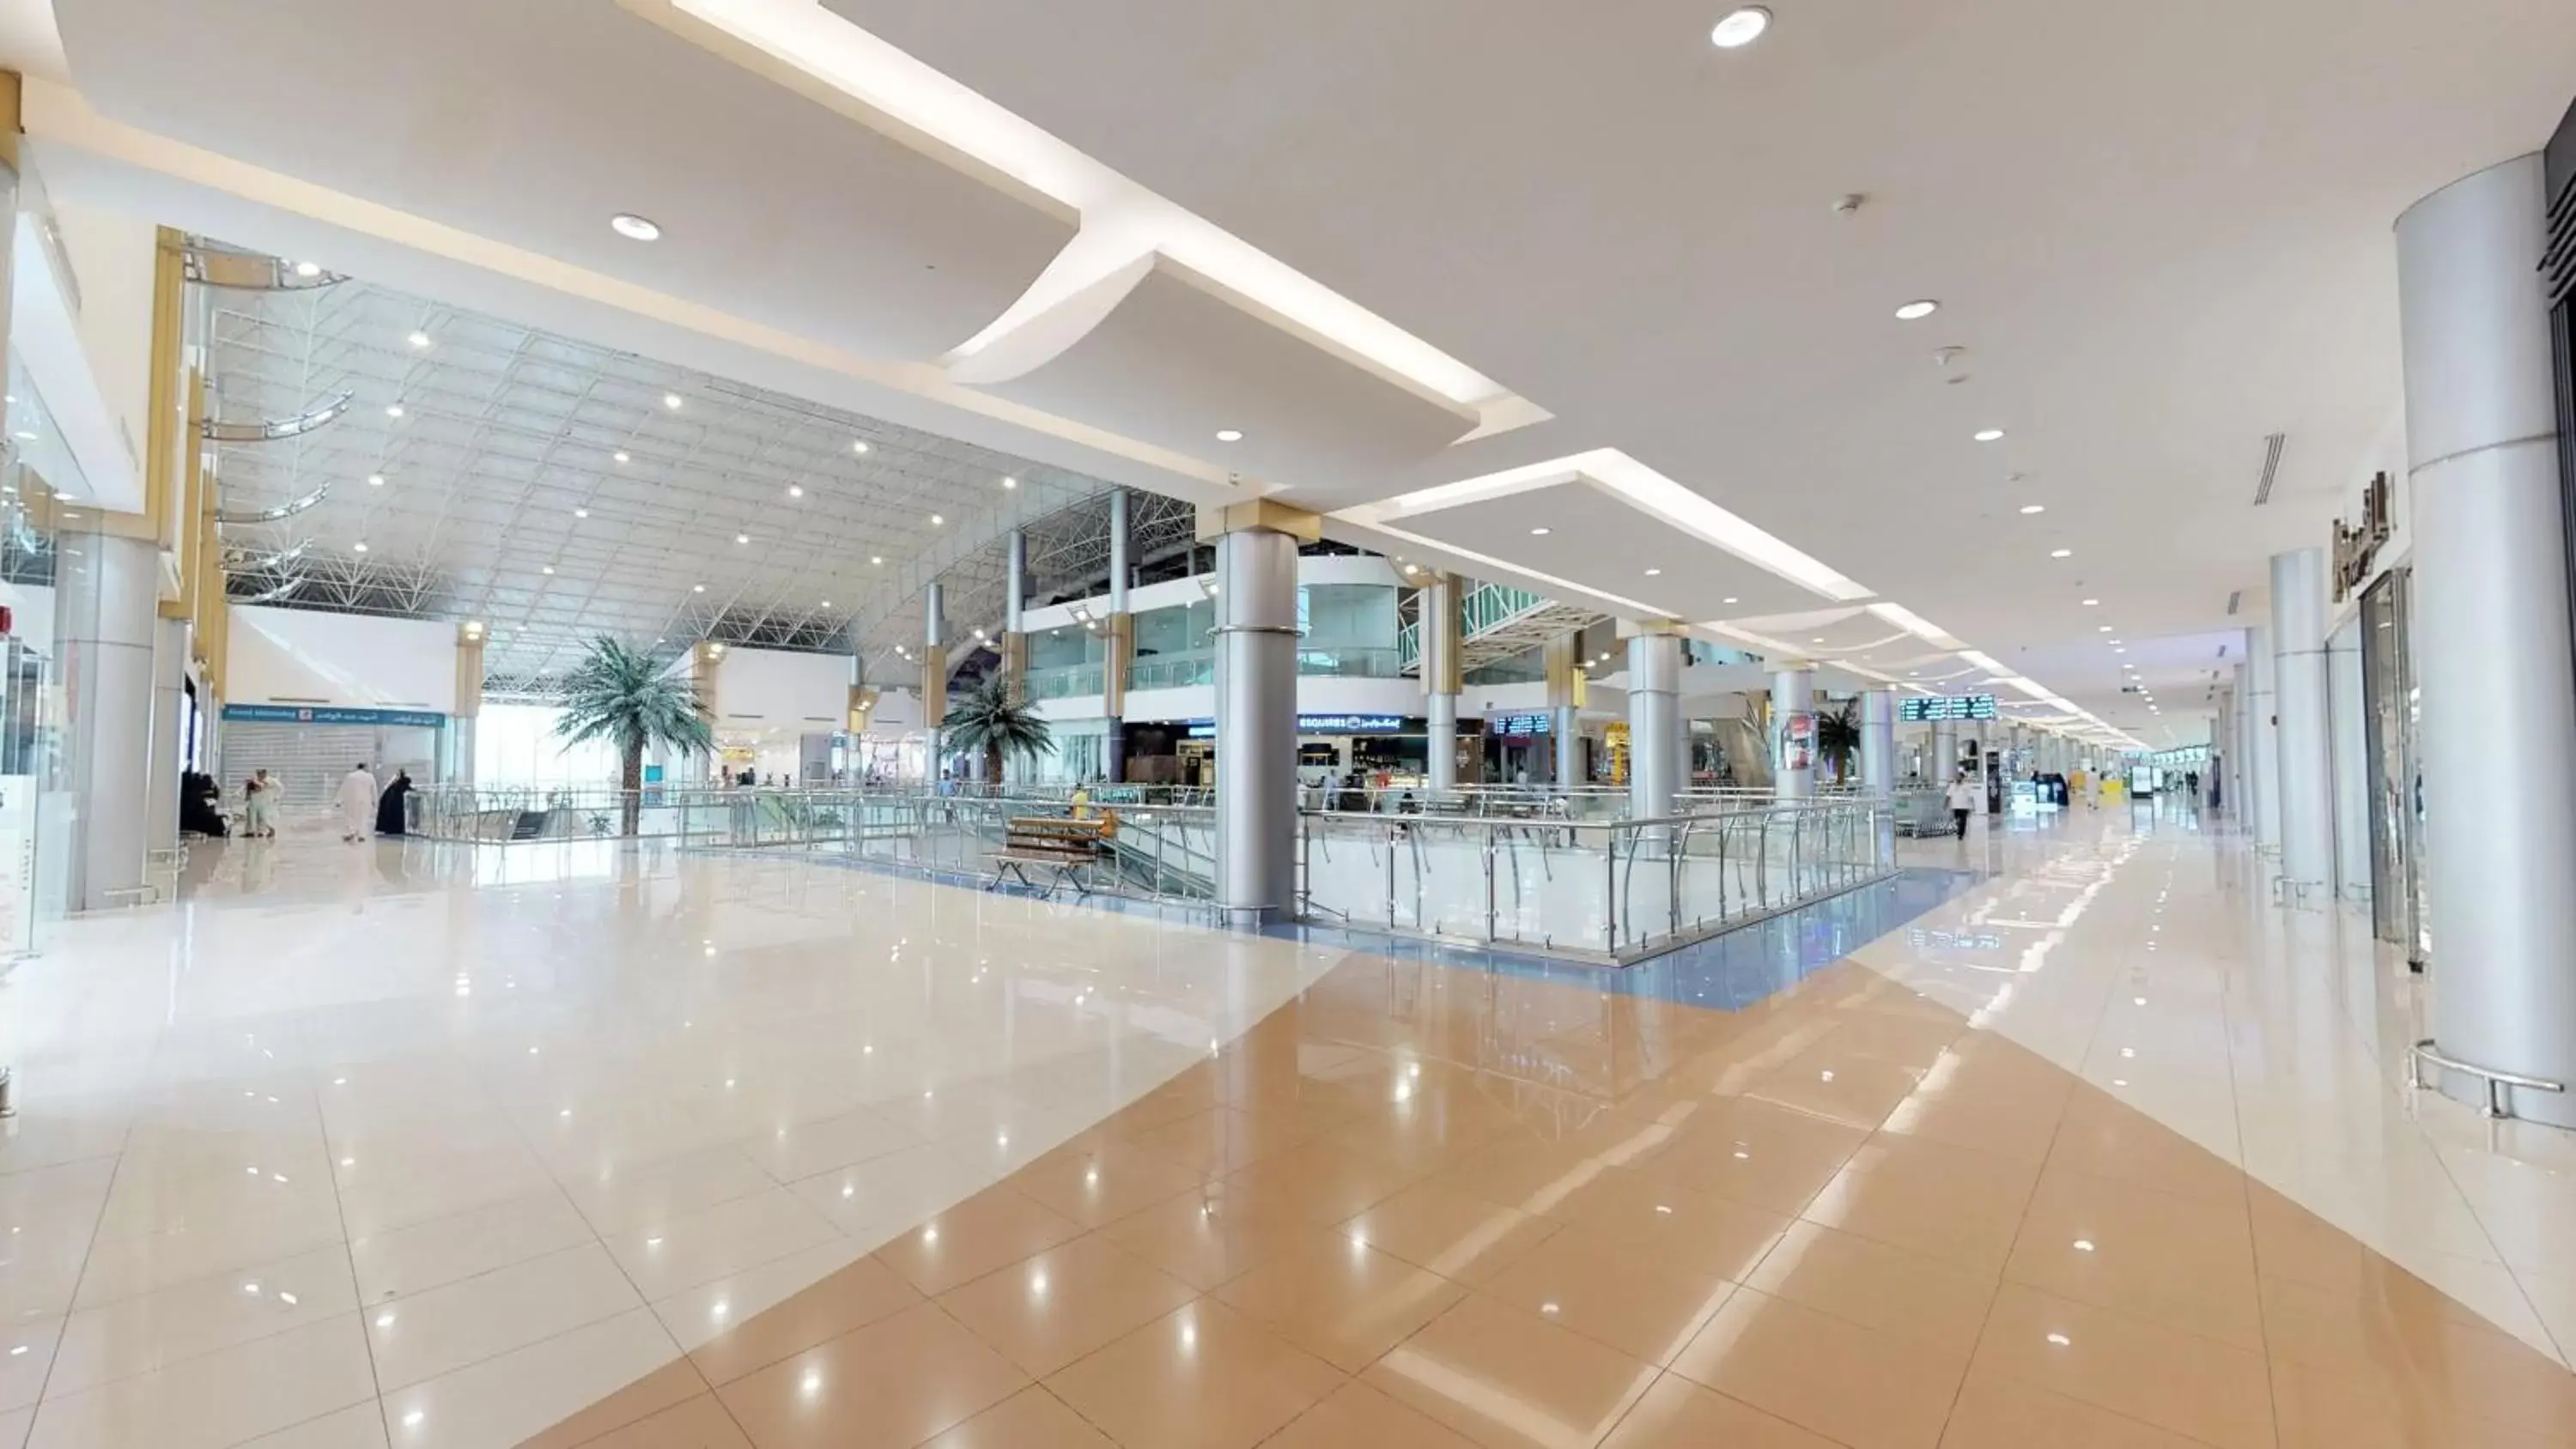 Lobby or reception in Alandalus Mall Hotel - Jeddah